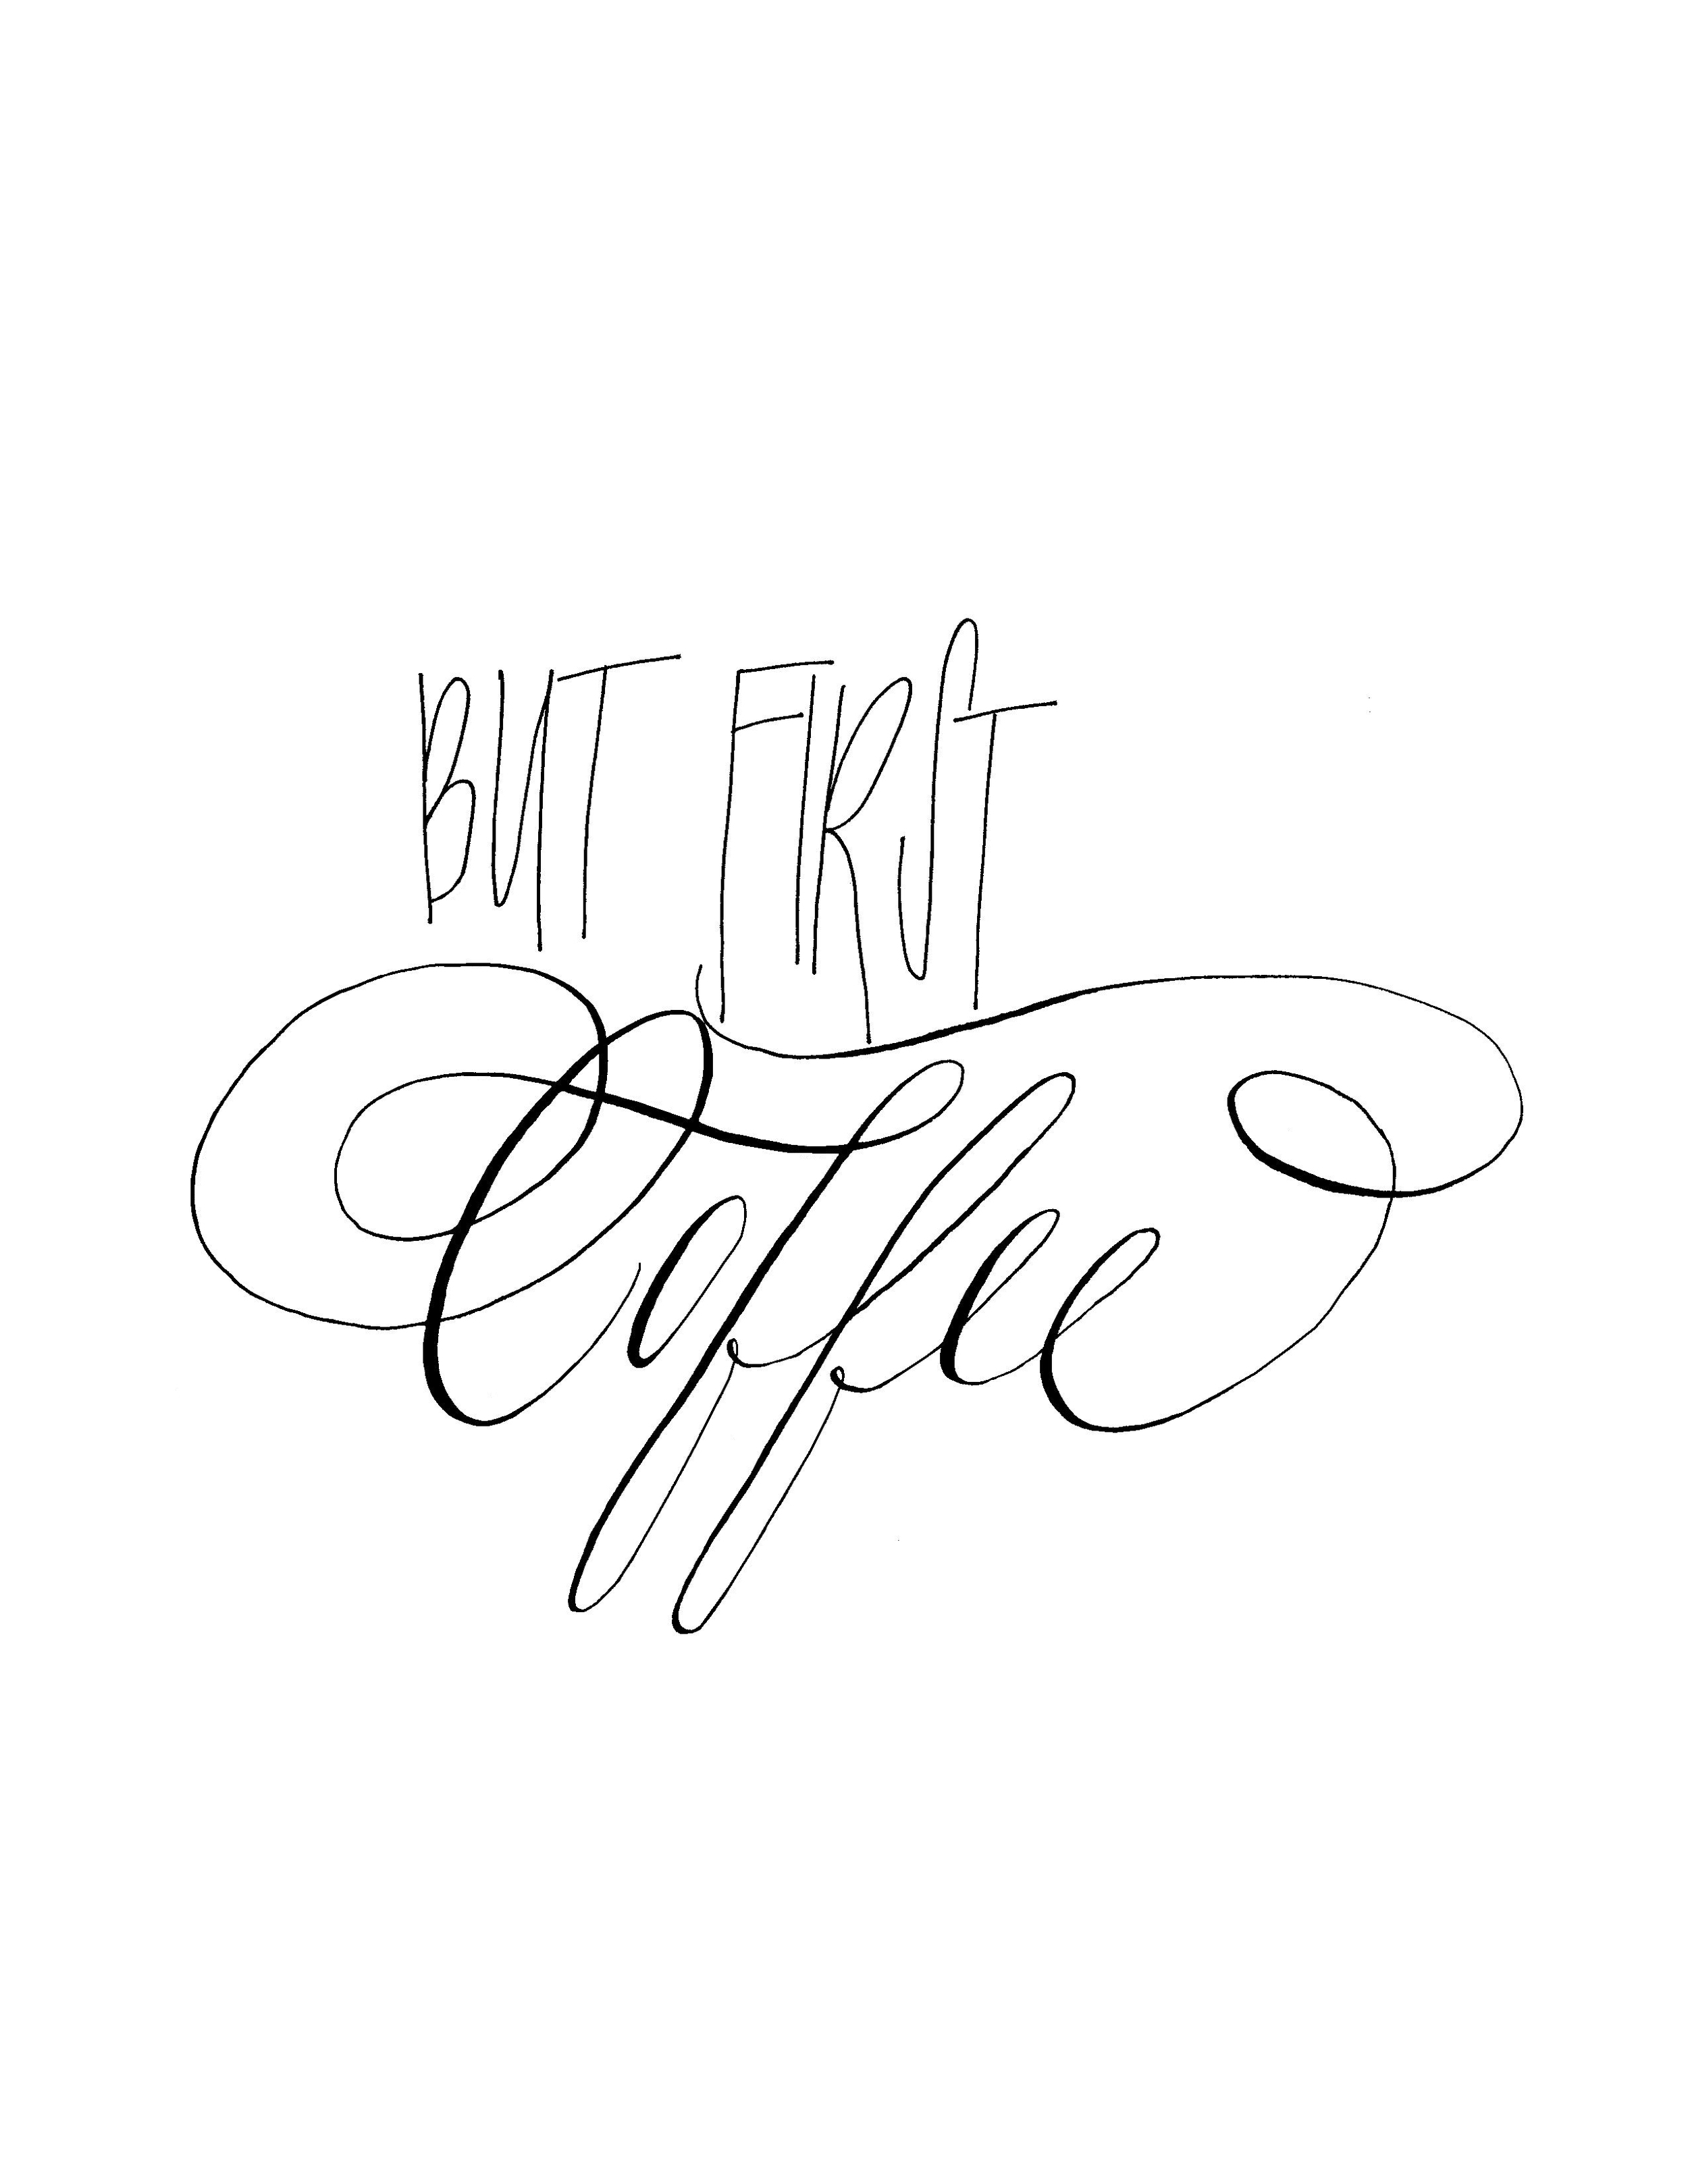 but first coffee.jpg